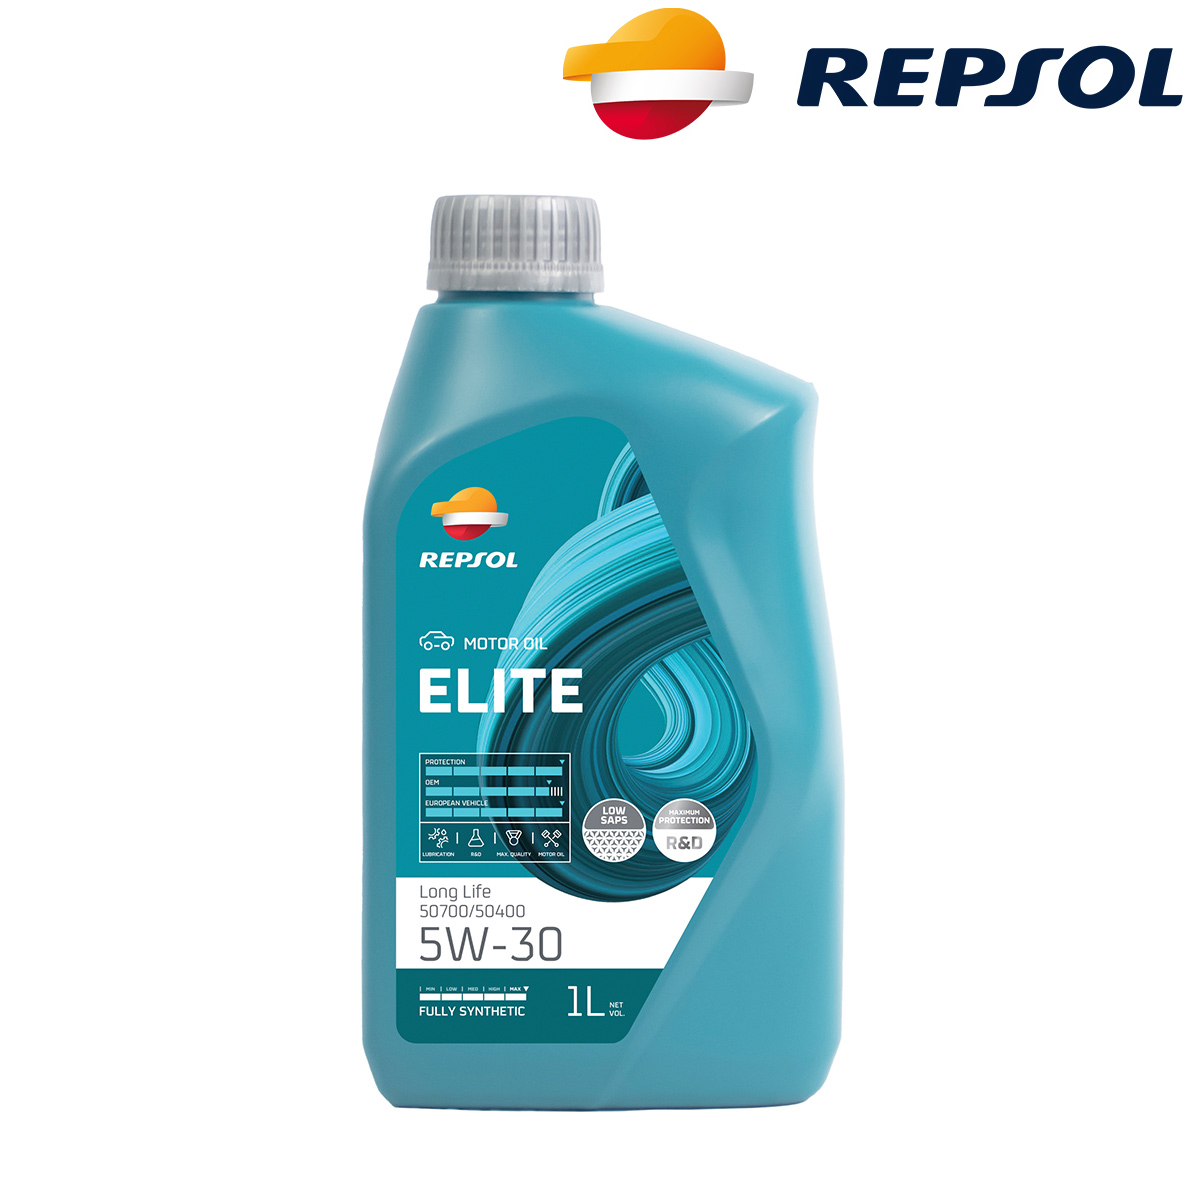 Motorno ulje - ulje za motore Repsol Elite Long Life 50700/50400 5W30 1l RPP0057IHA